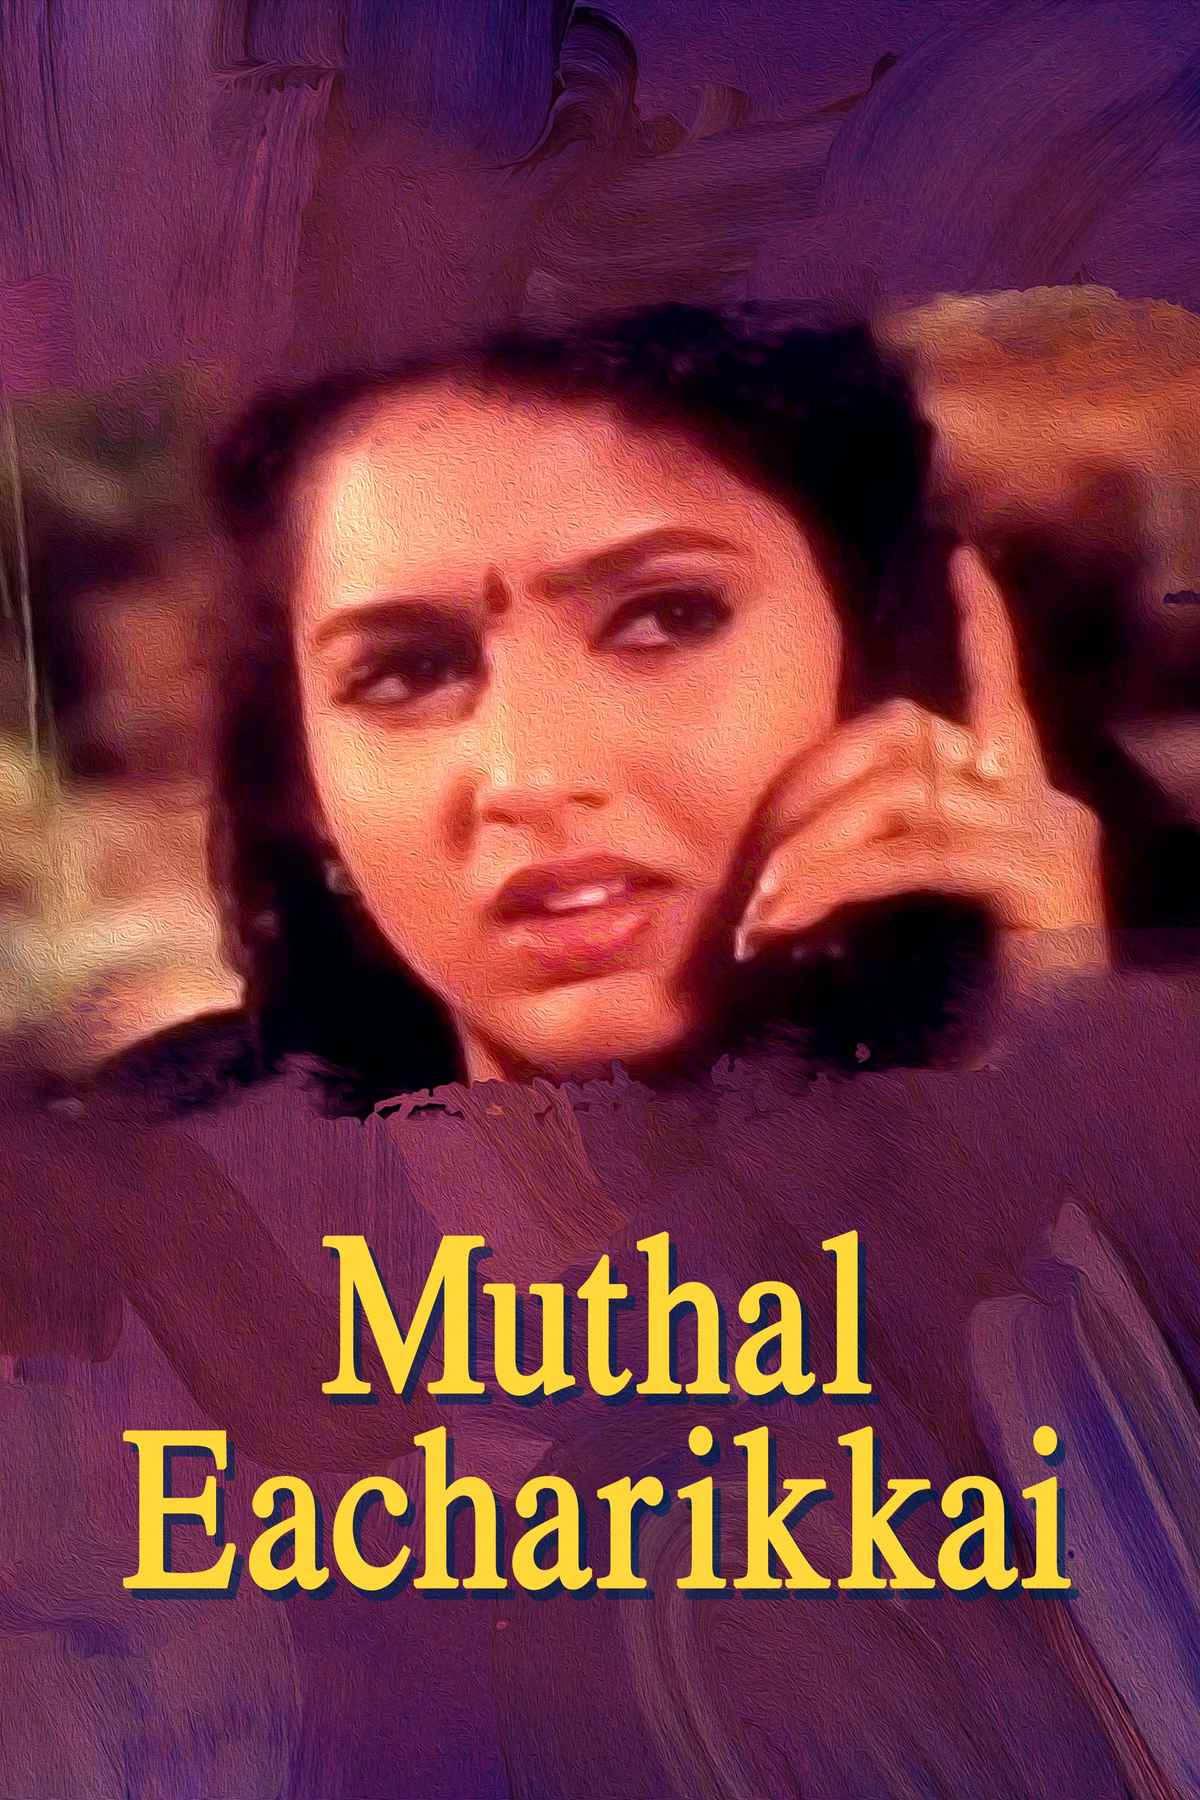 Muthal Eacharikkai